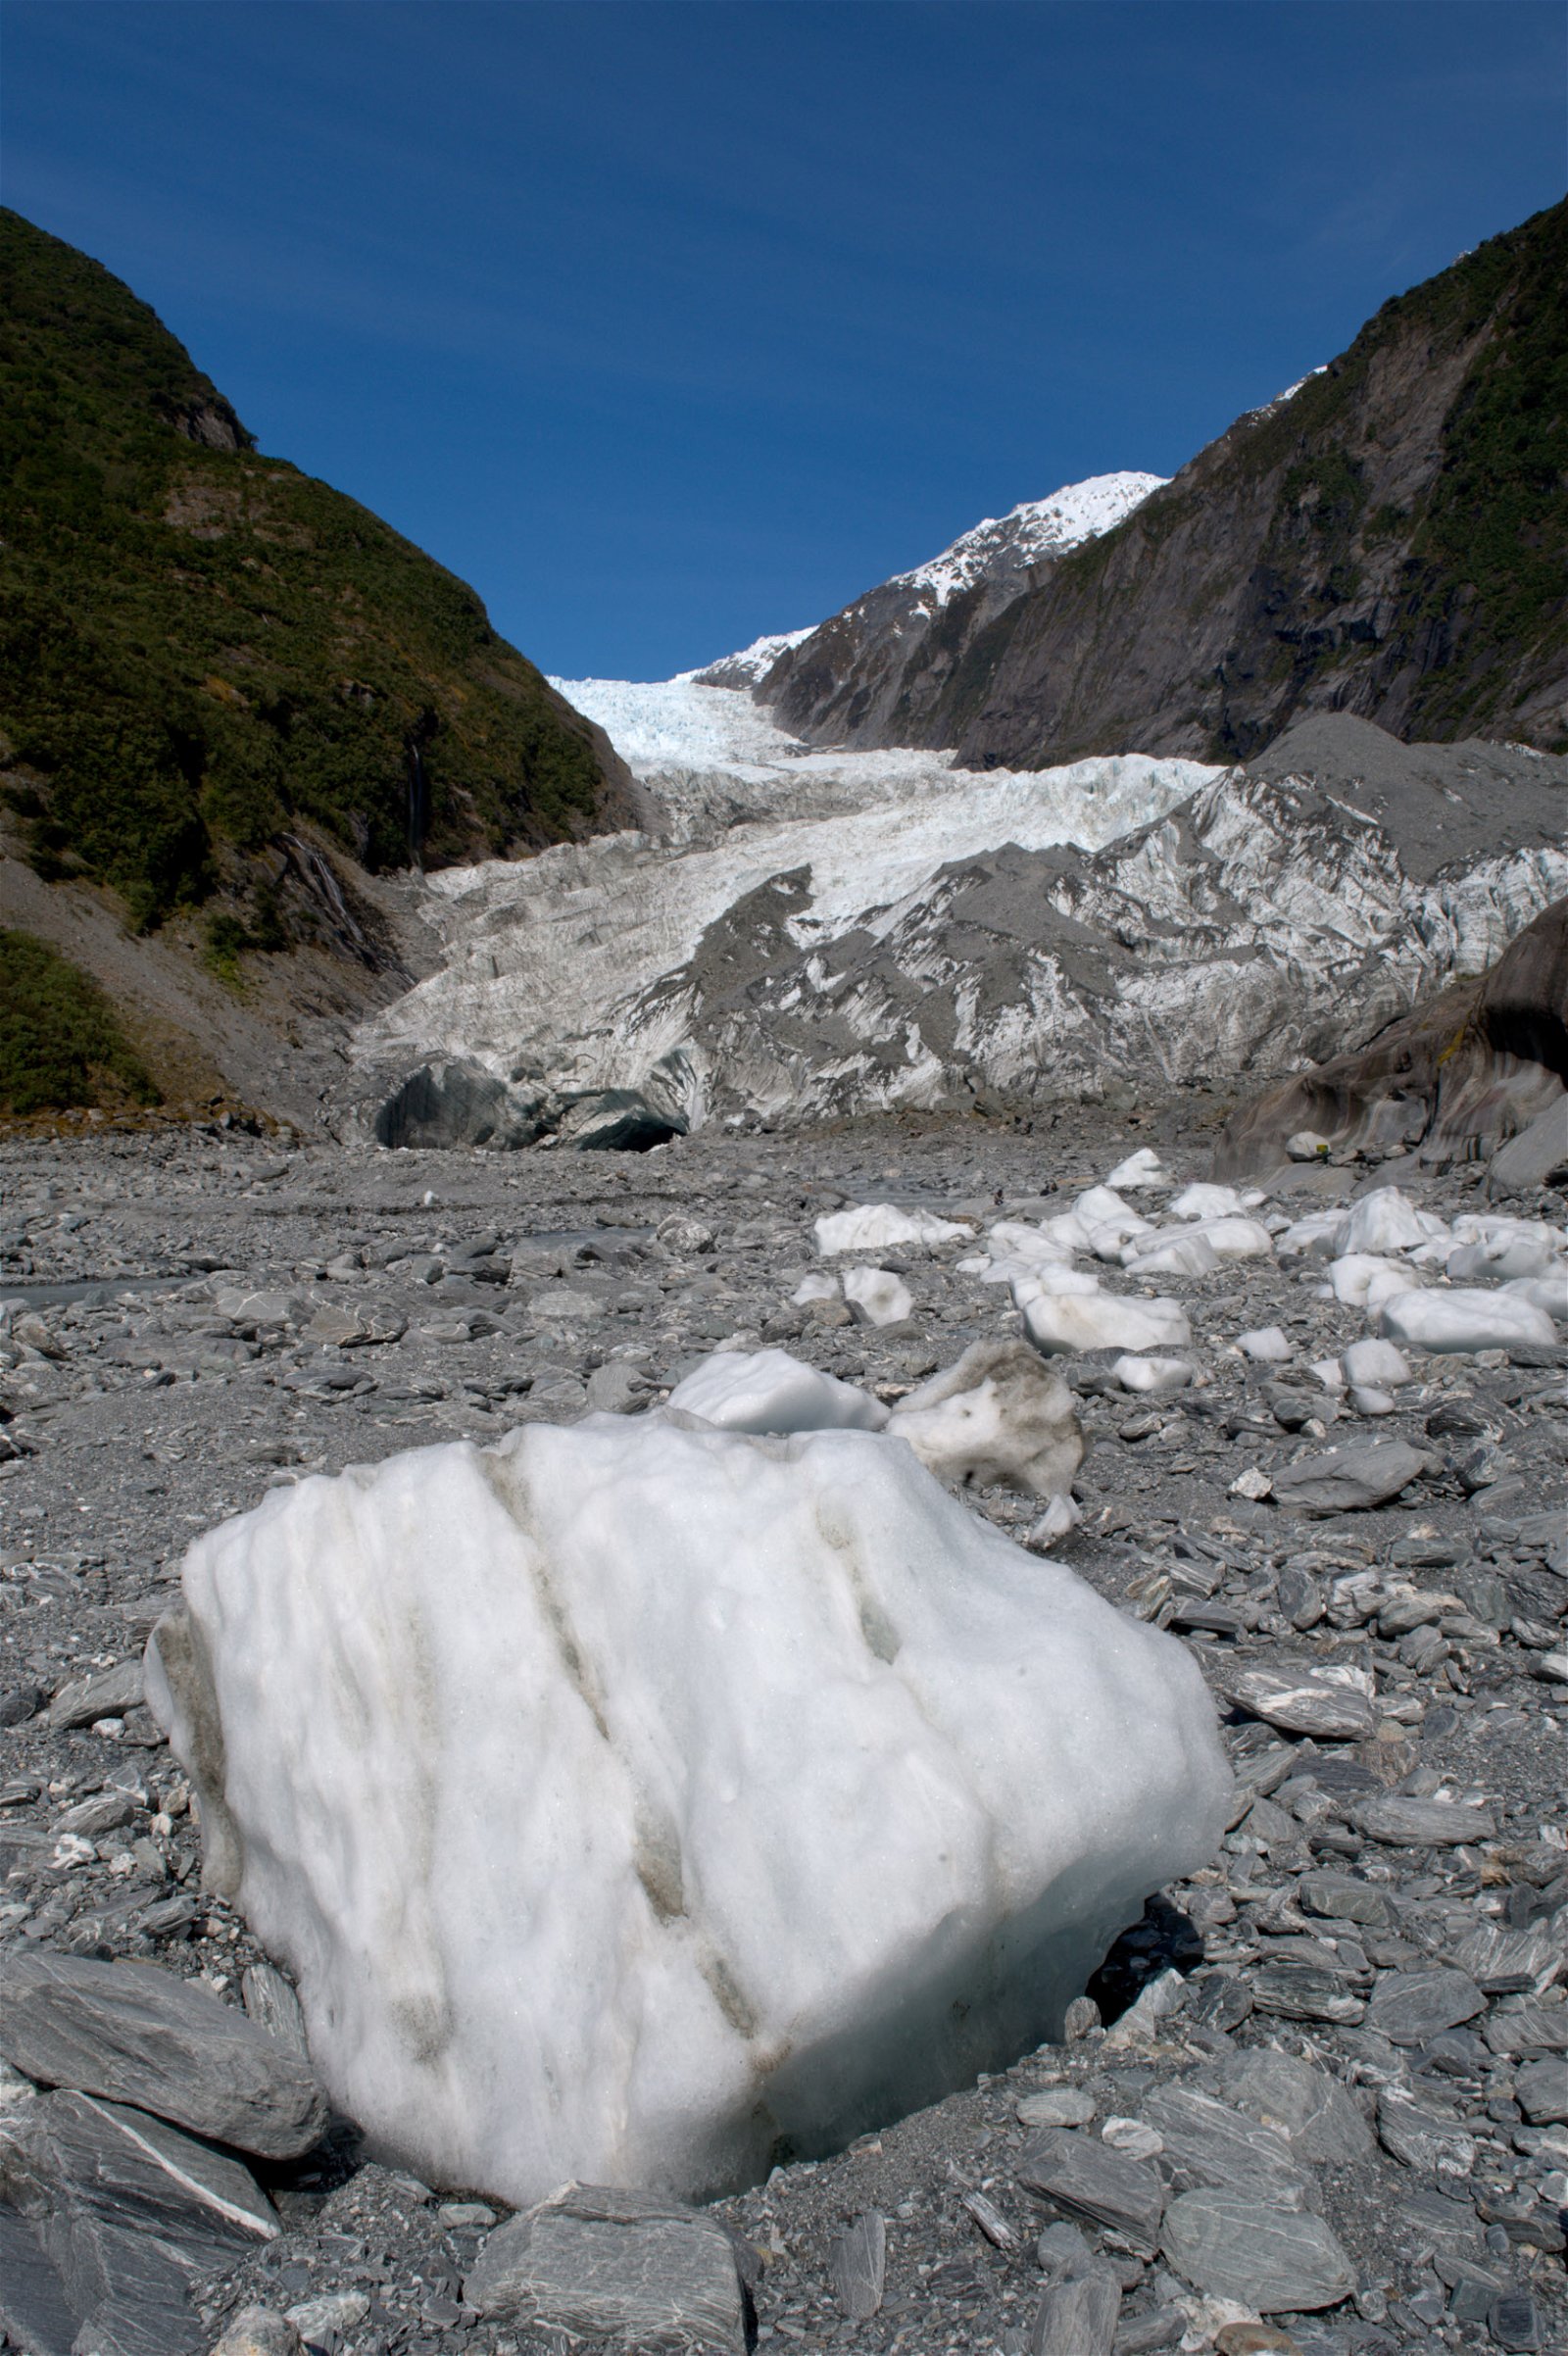 Glacier landscape image with deep depth of field.